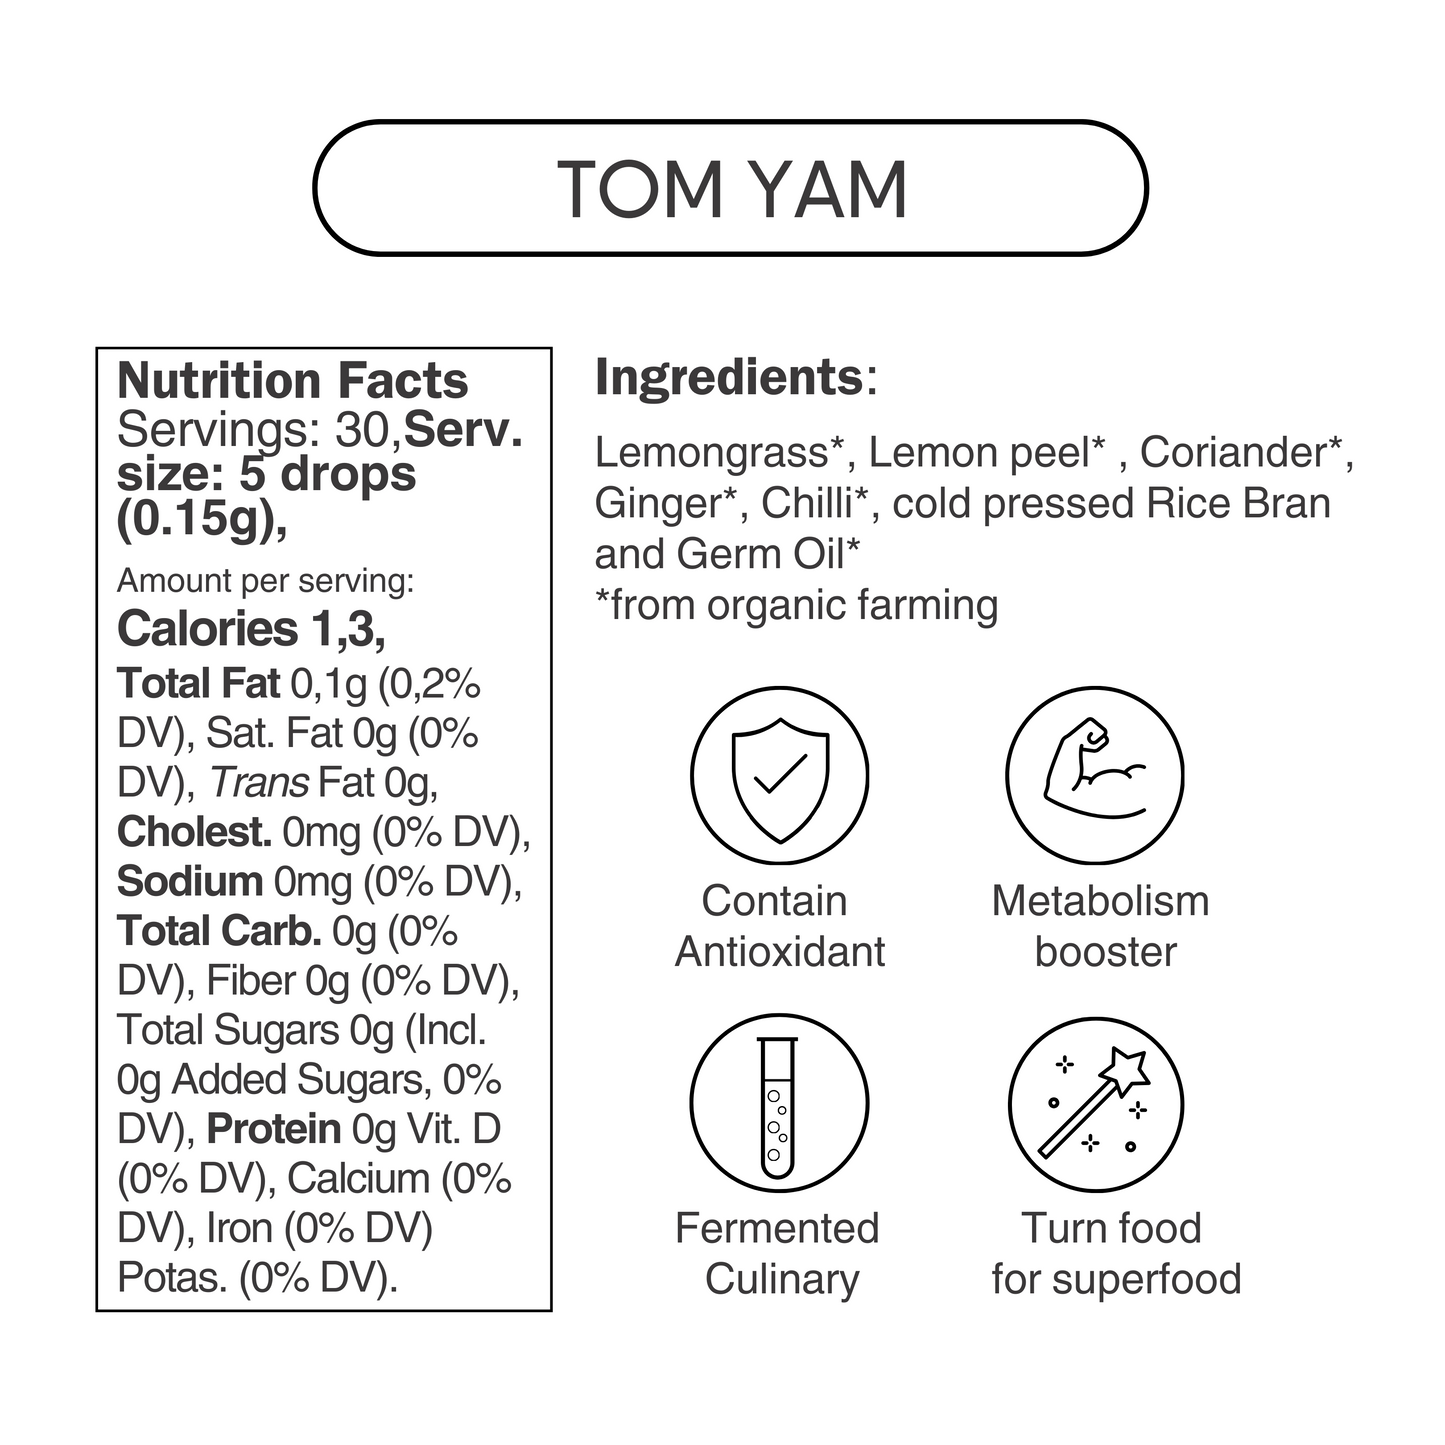 Tom Yam Liquid Fermented Antioxidant